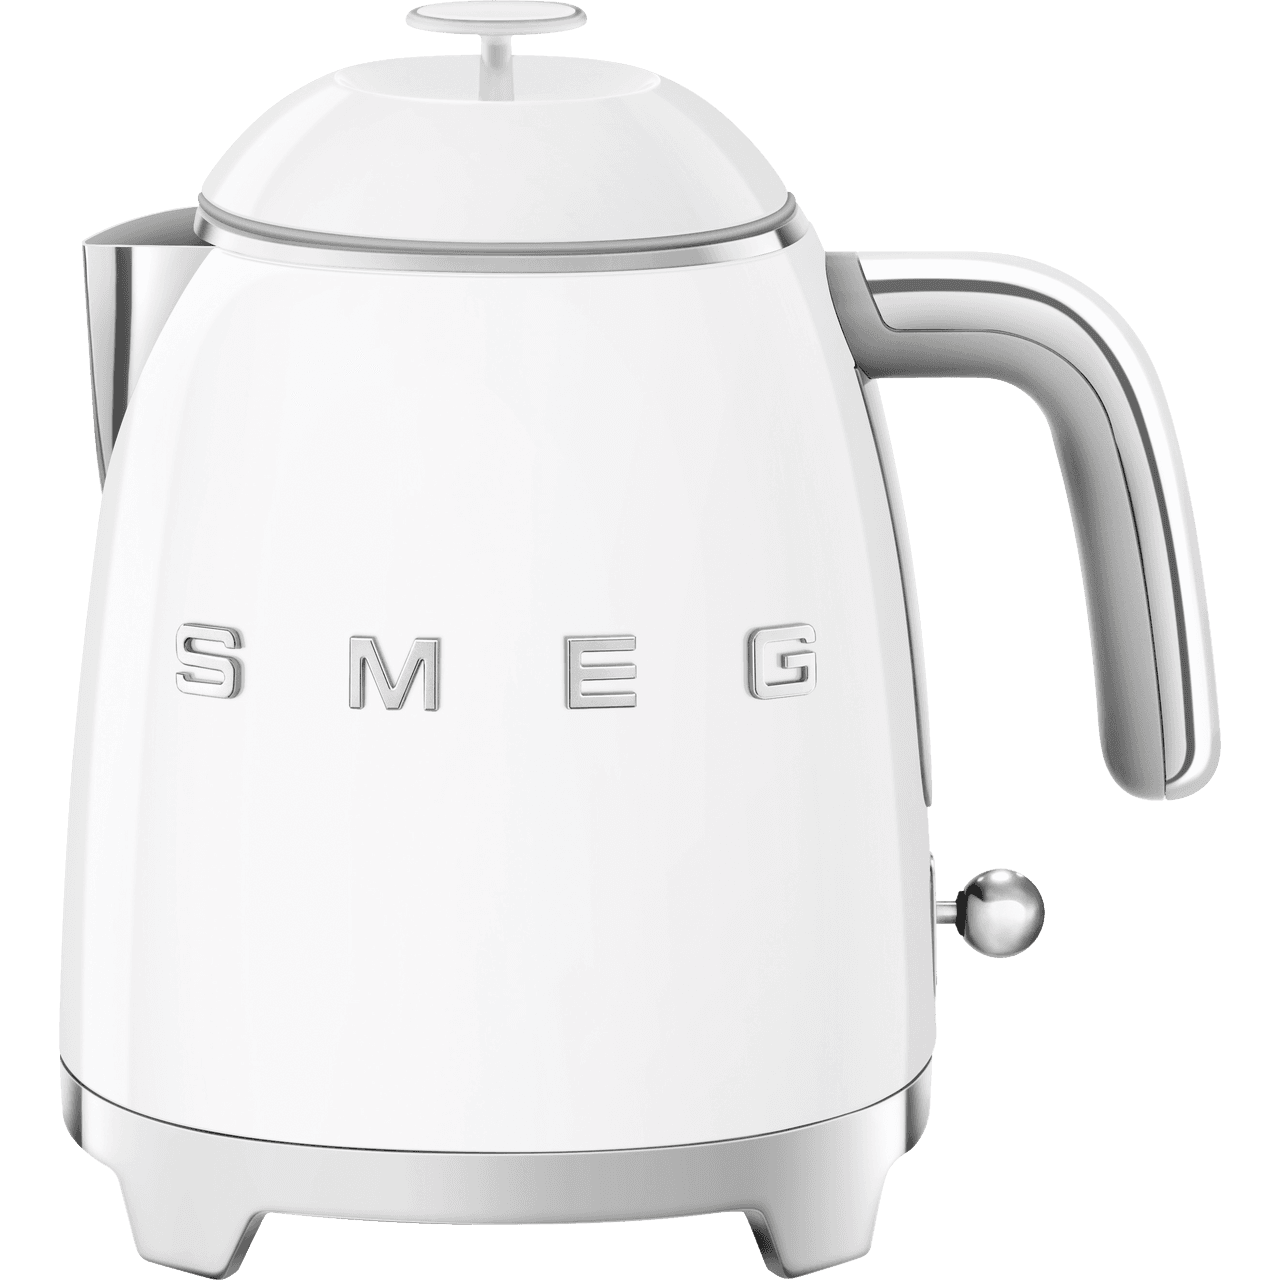 50's Retro Variable Electric Water Kettle - White, SMEG